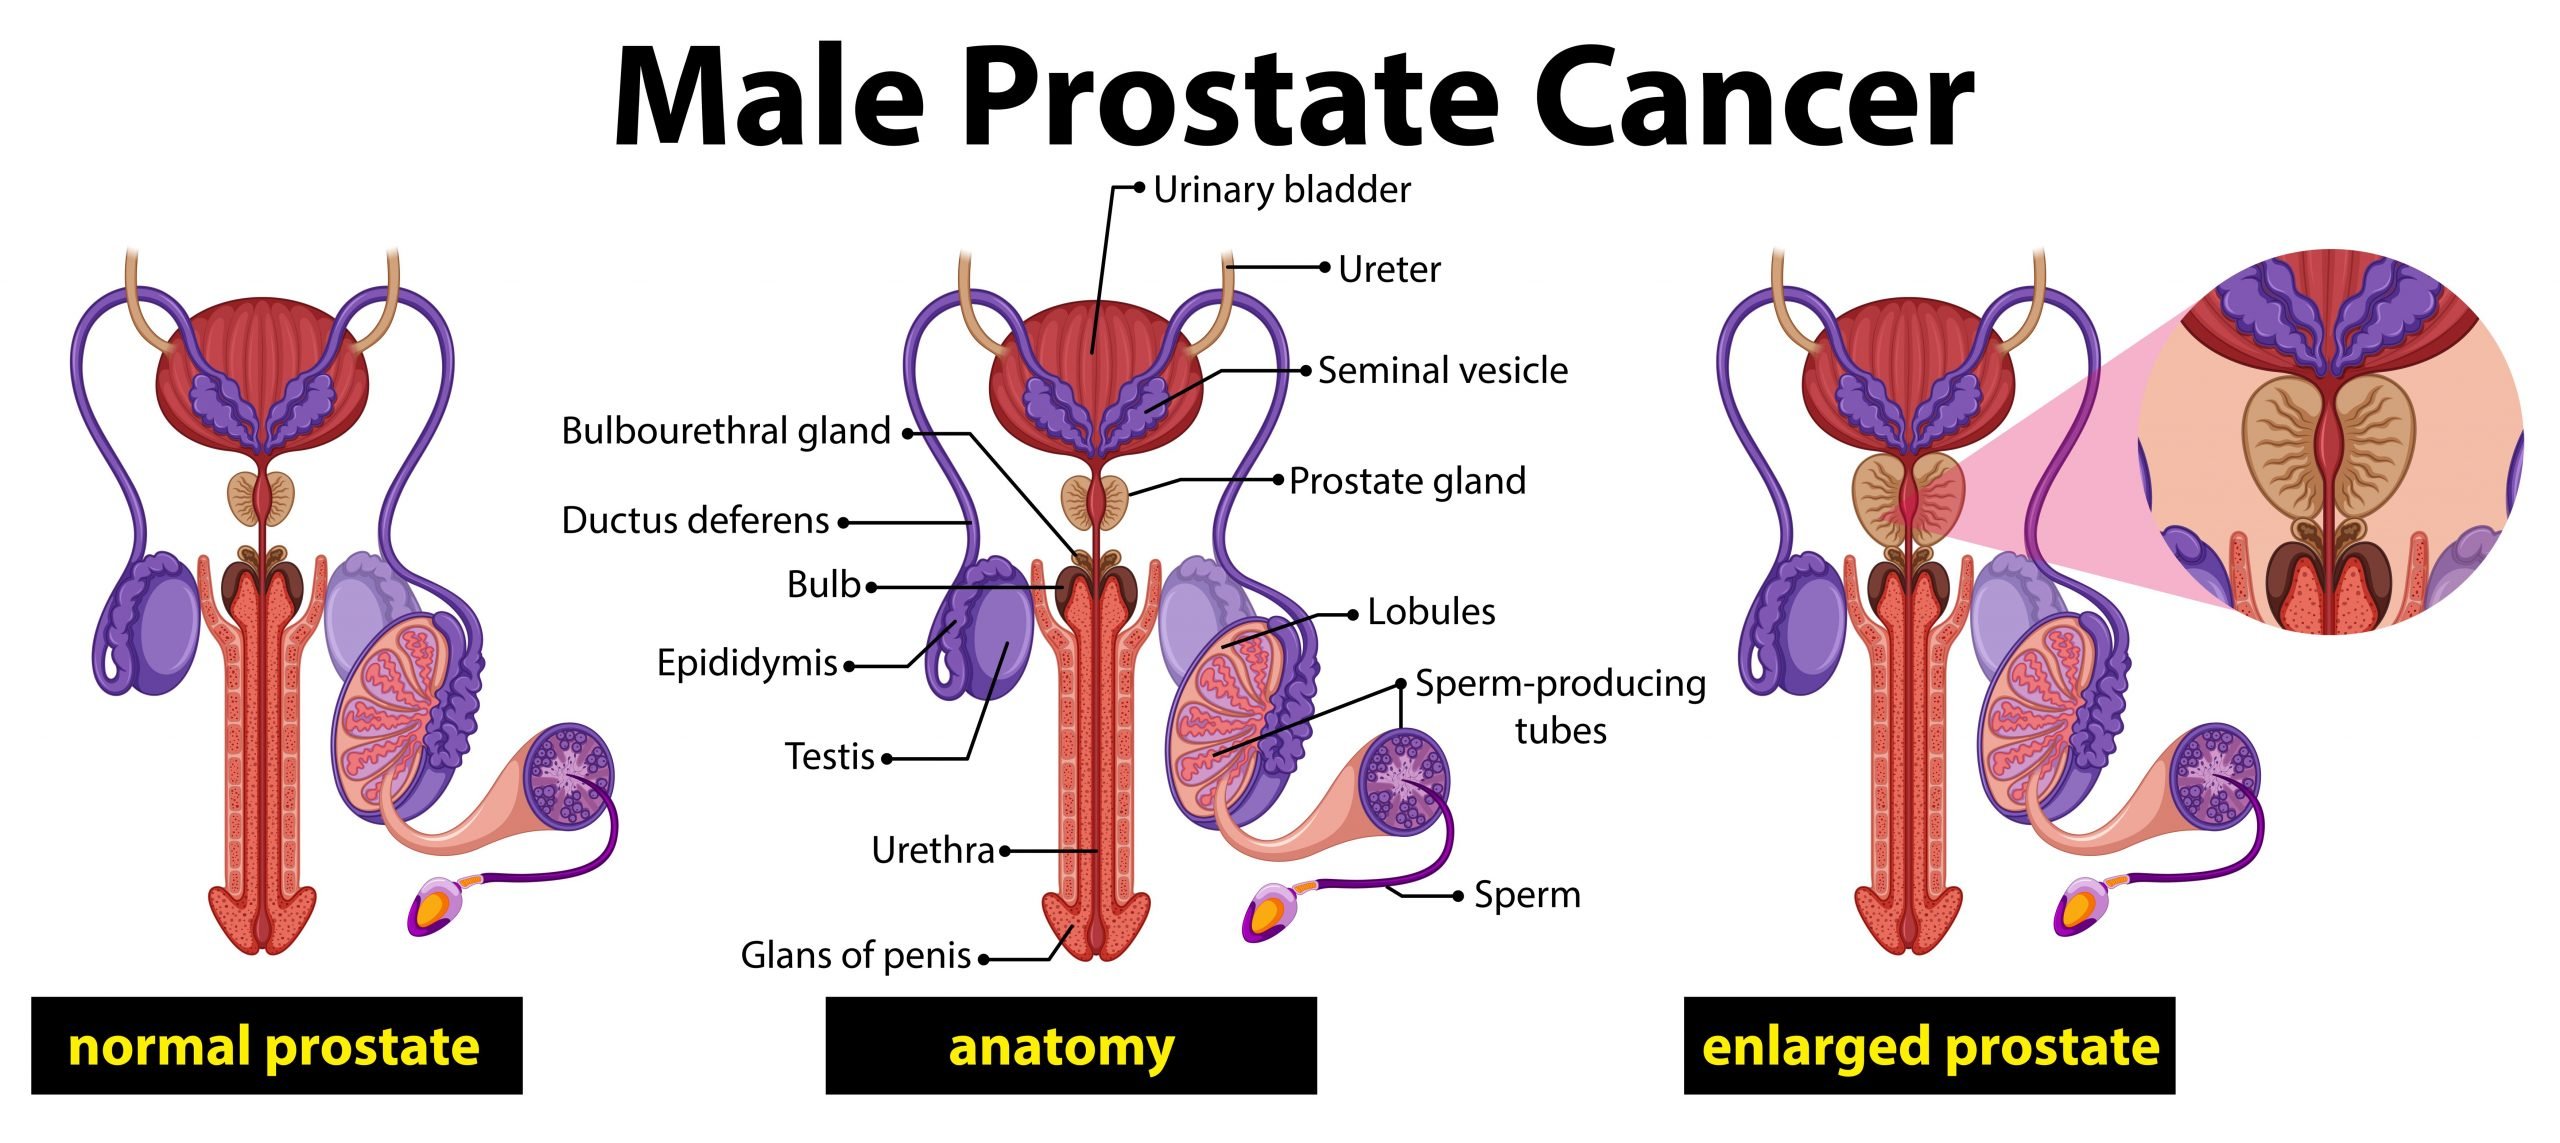 Male prostate cancer diagram 432062